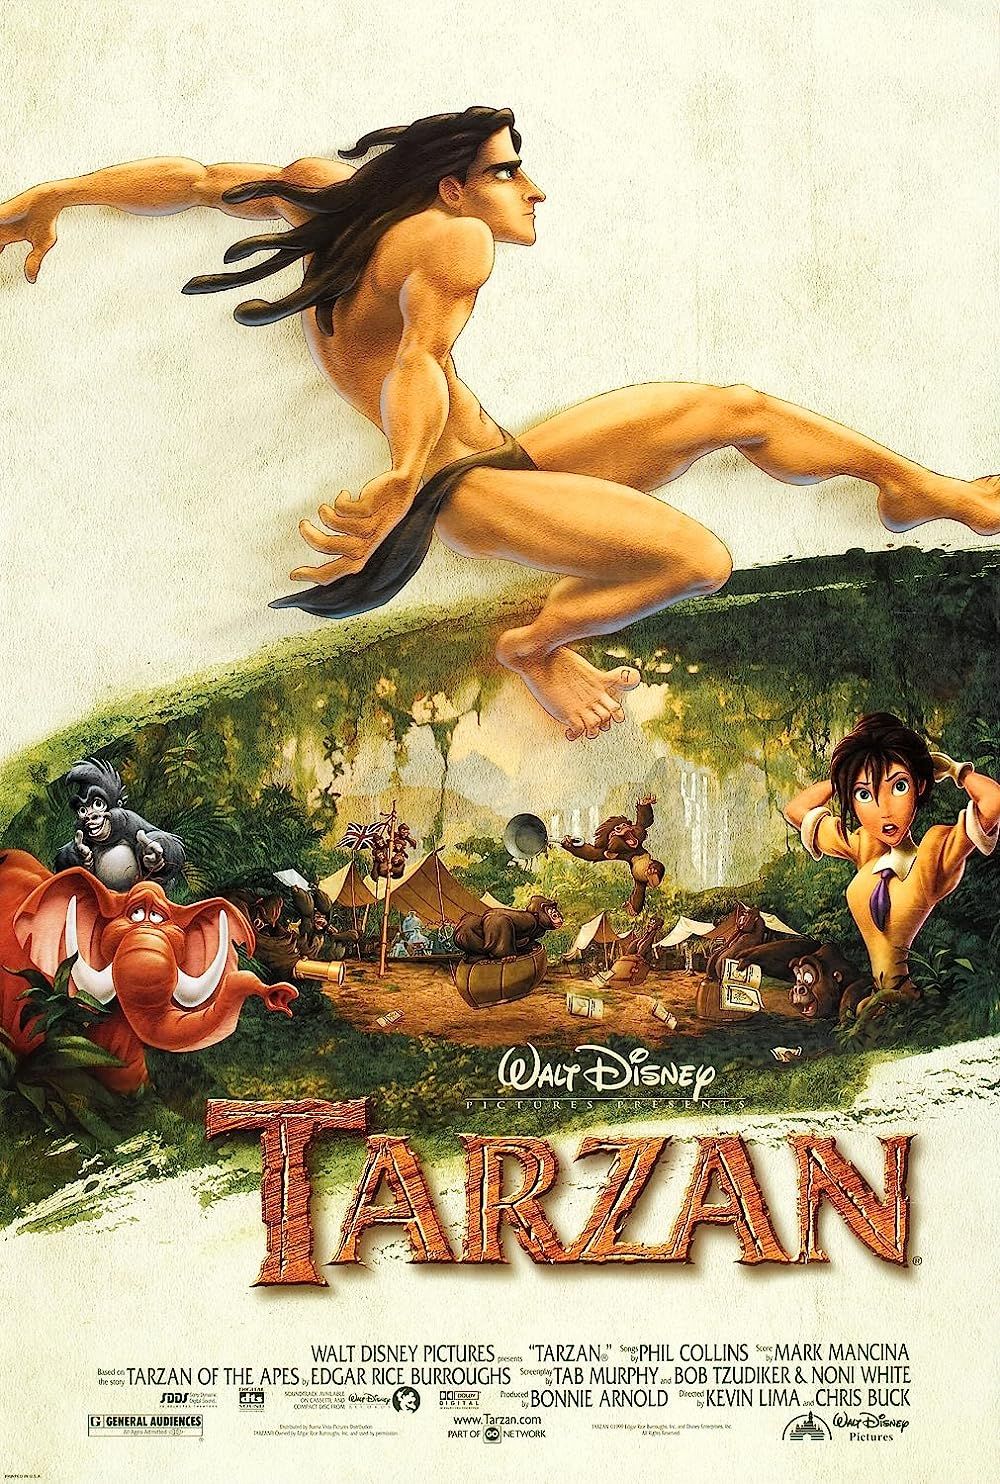 Disney's Tarzsn